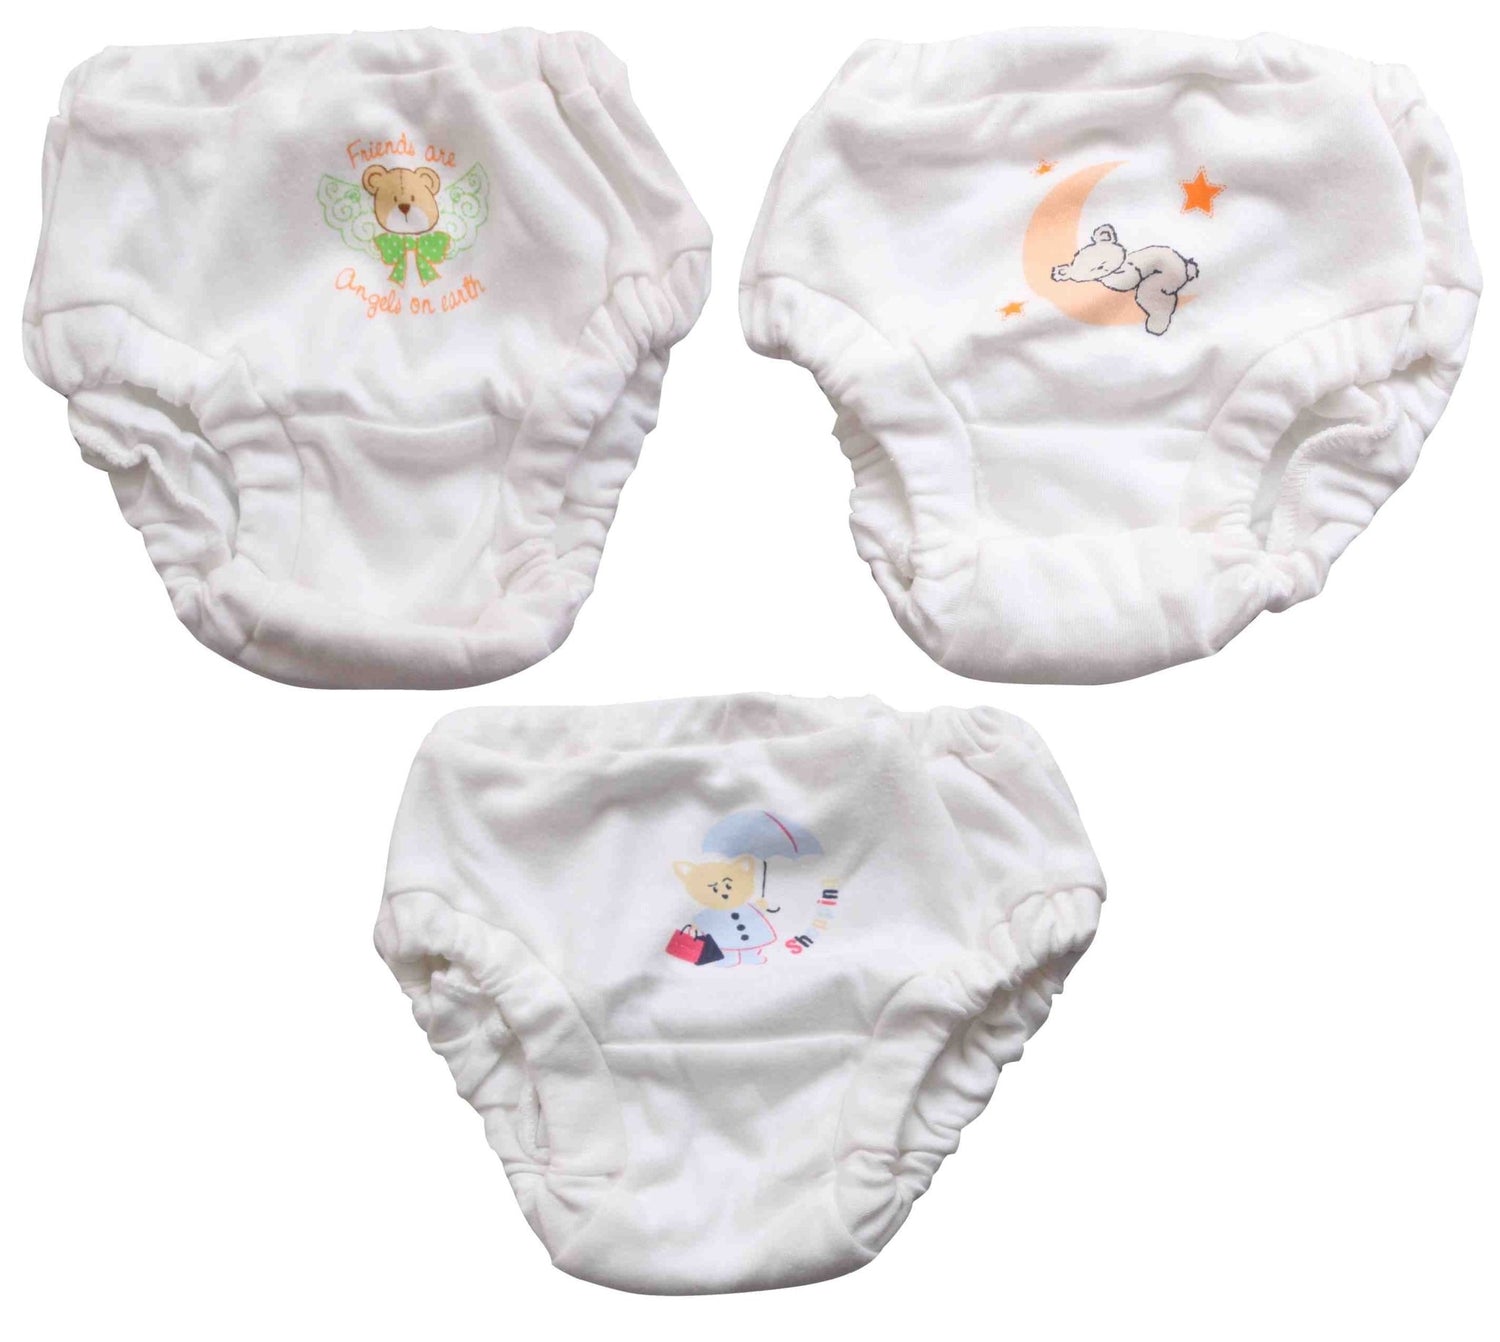 Newborn baby boys & baby girls panties set, infant wear